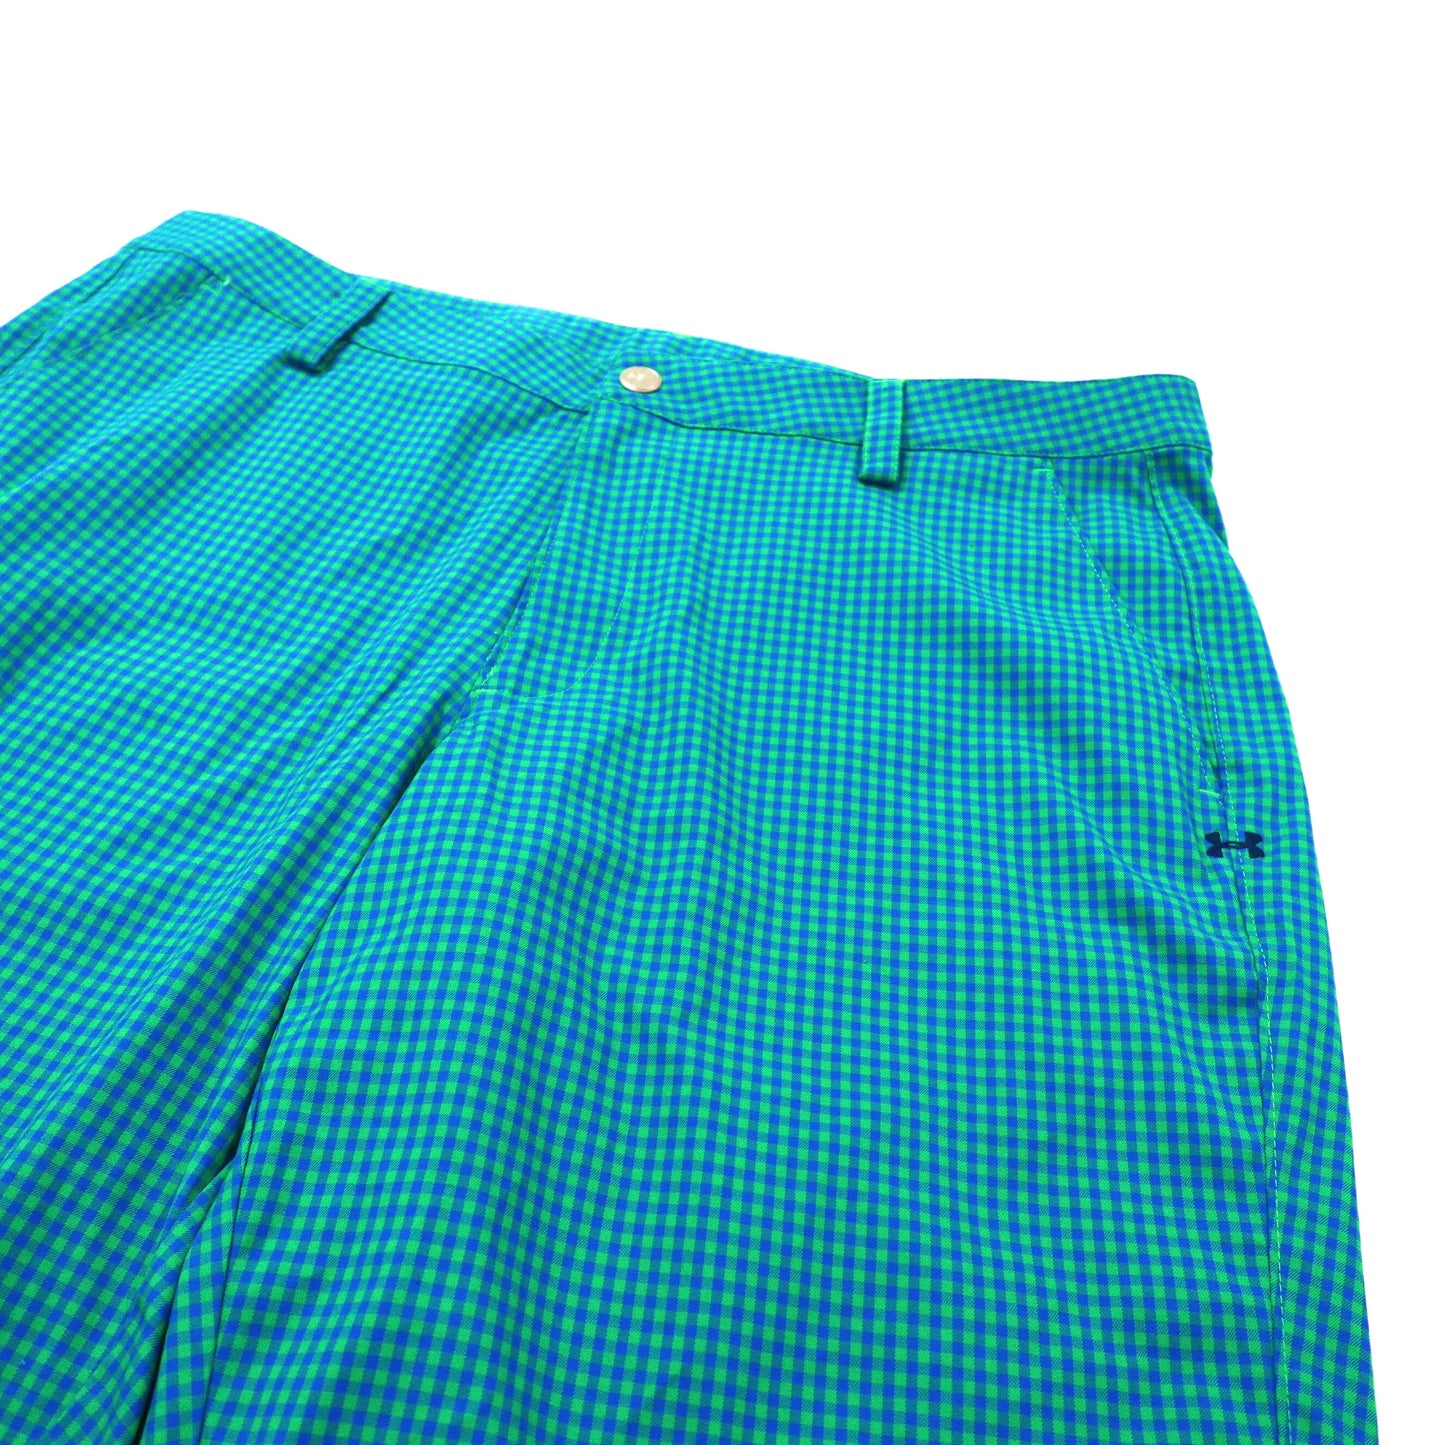 UNDER ARMOUR ゴルフドレスショートパンツ 38 グリーン チェック  Golf Dress Shorts 1242764